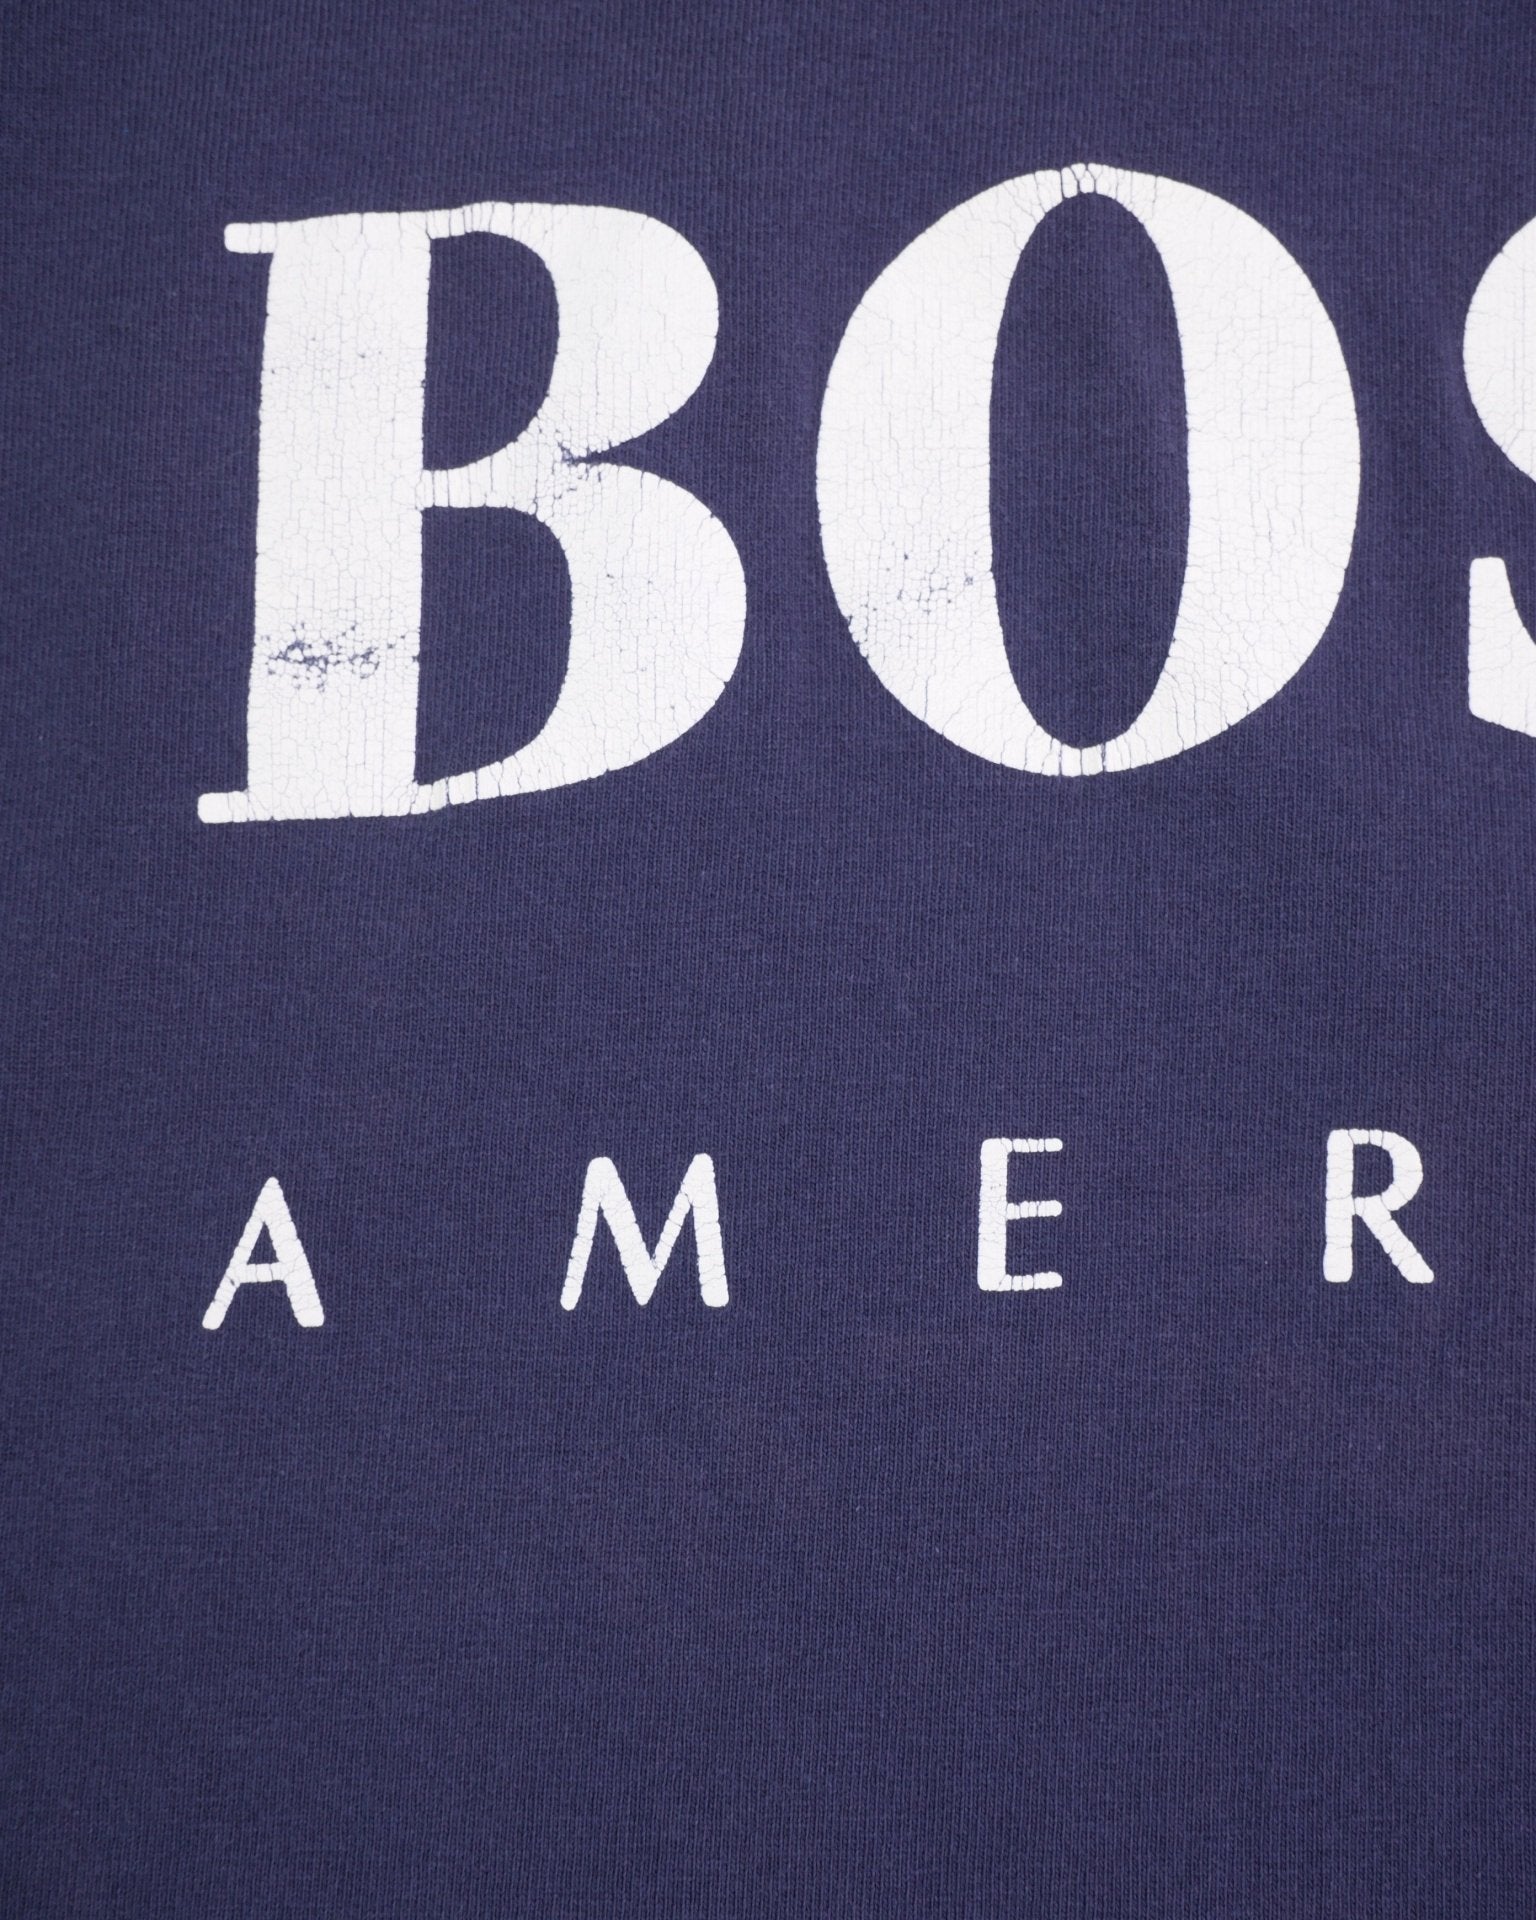 Hugo Boss printed Spellout navy Shirt - Peeces